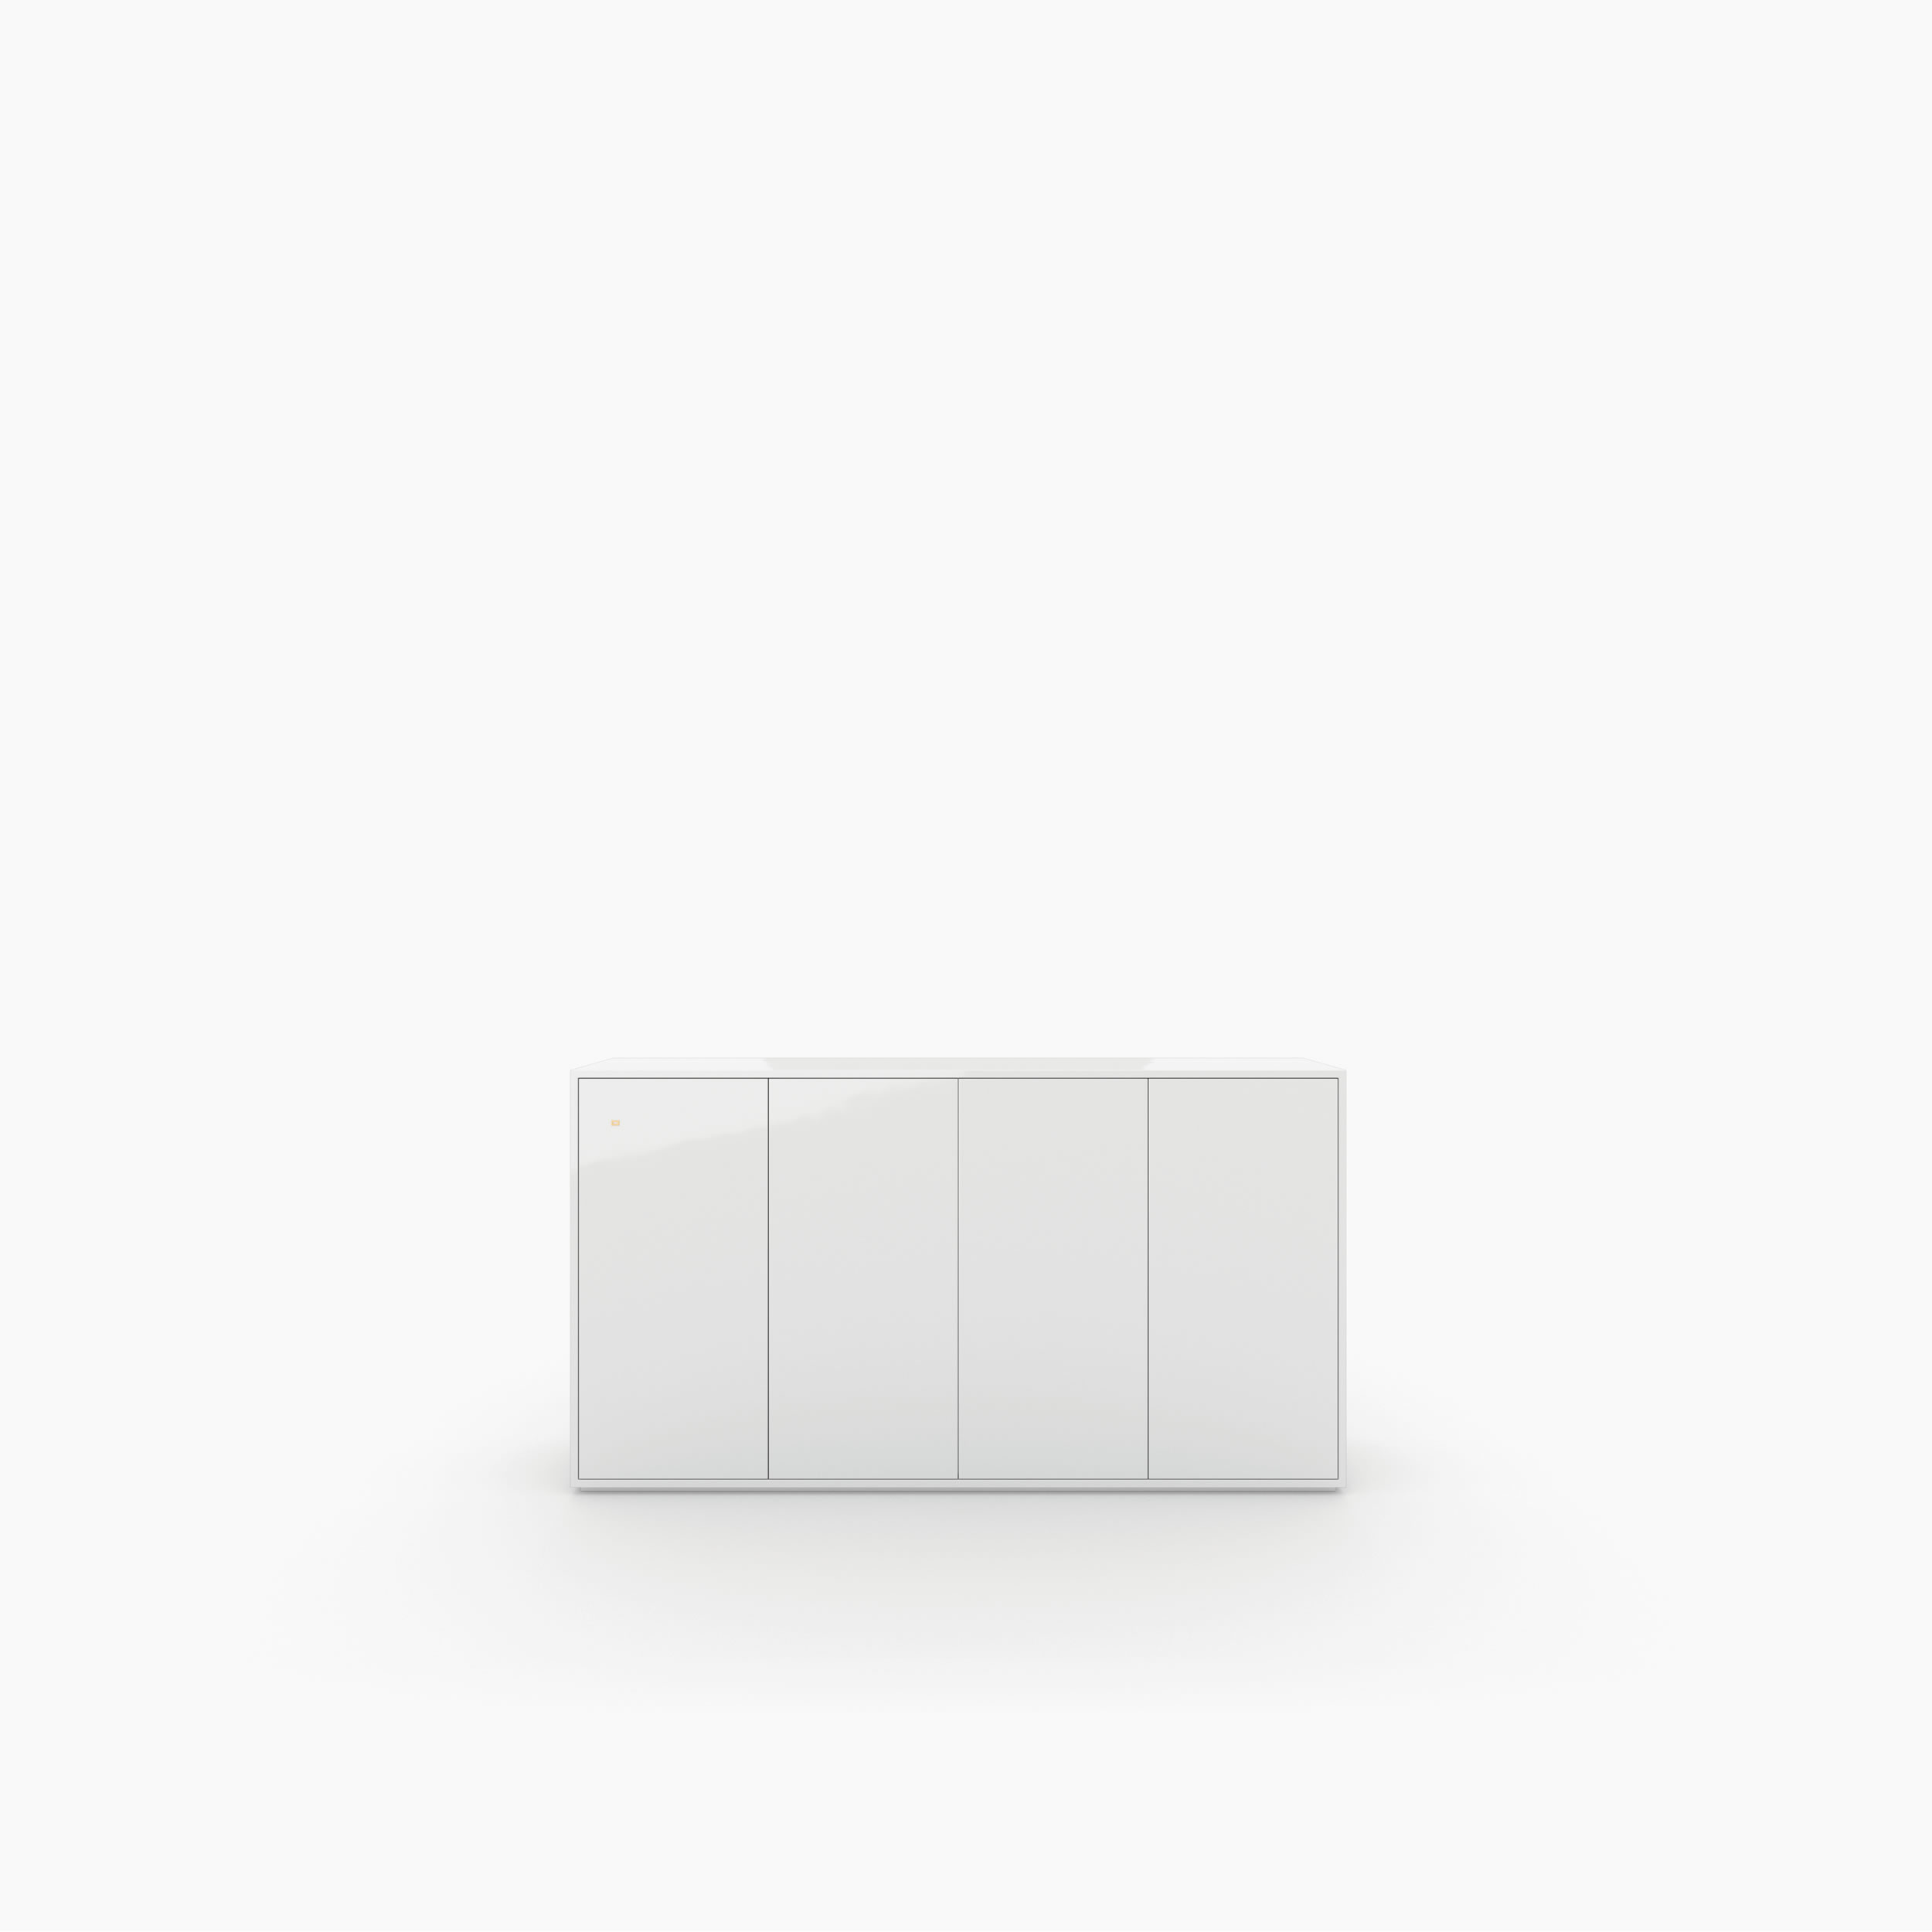 Sideboard quader weiss all white Buero art furniture Sideboards FS 64 FELIX SCHWAKE